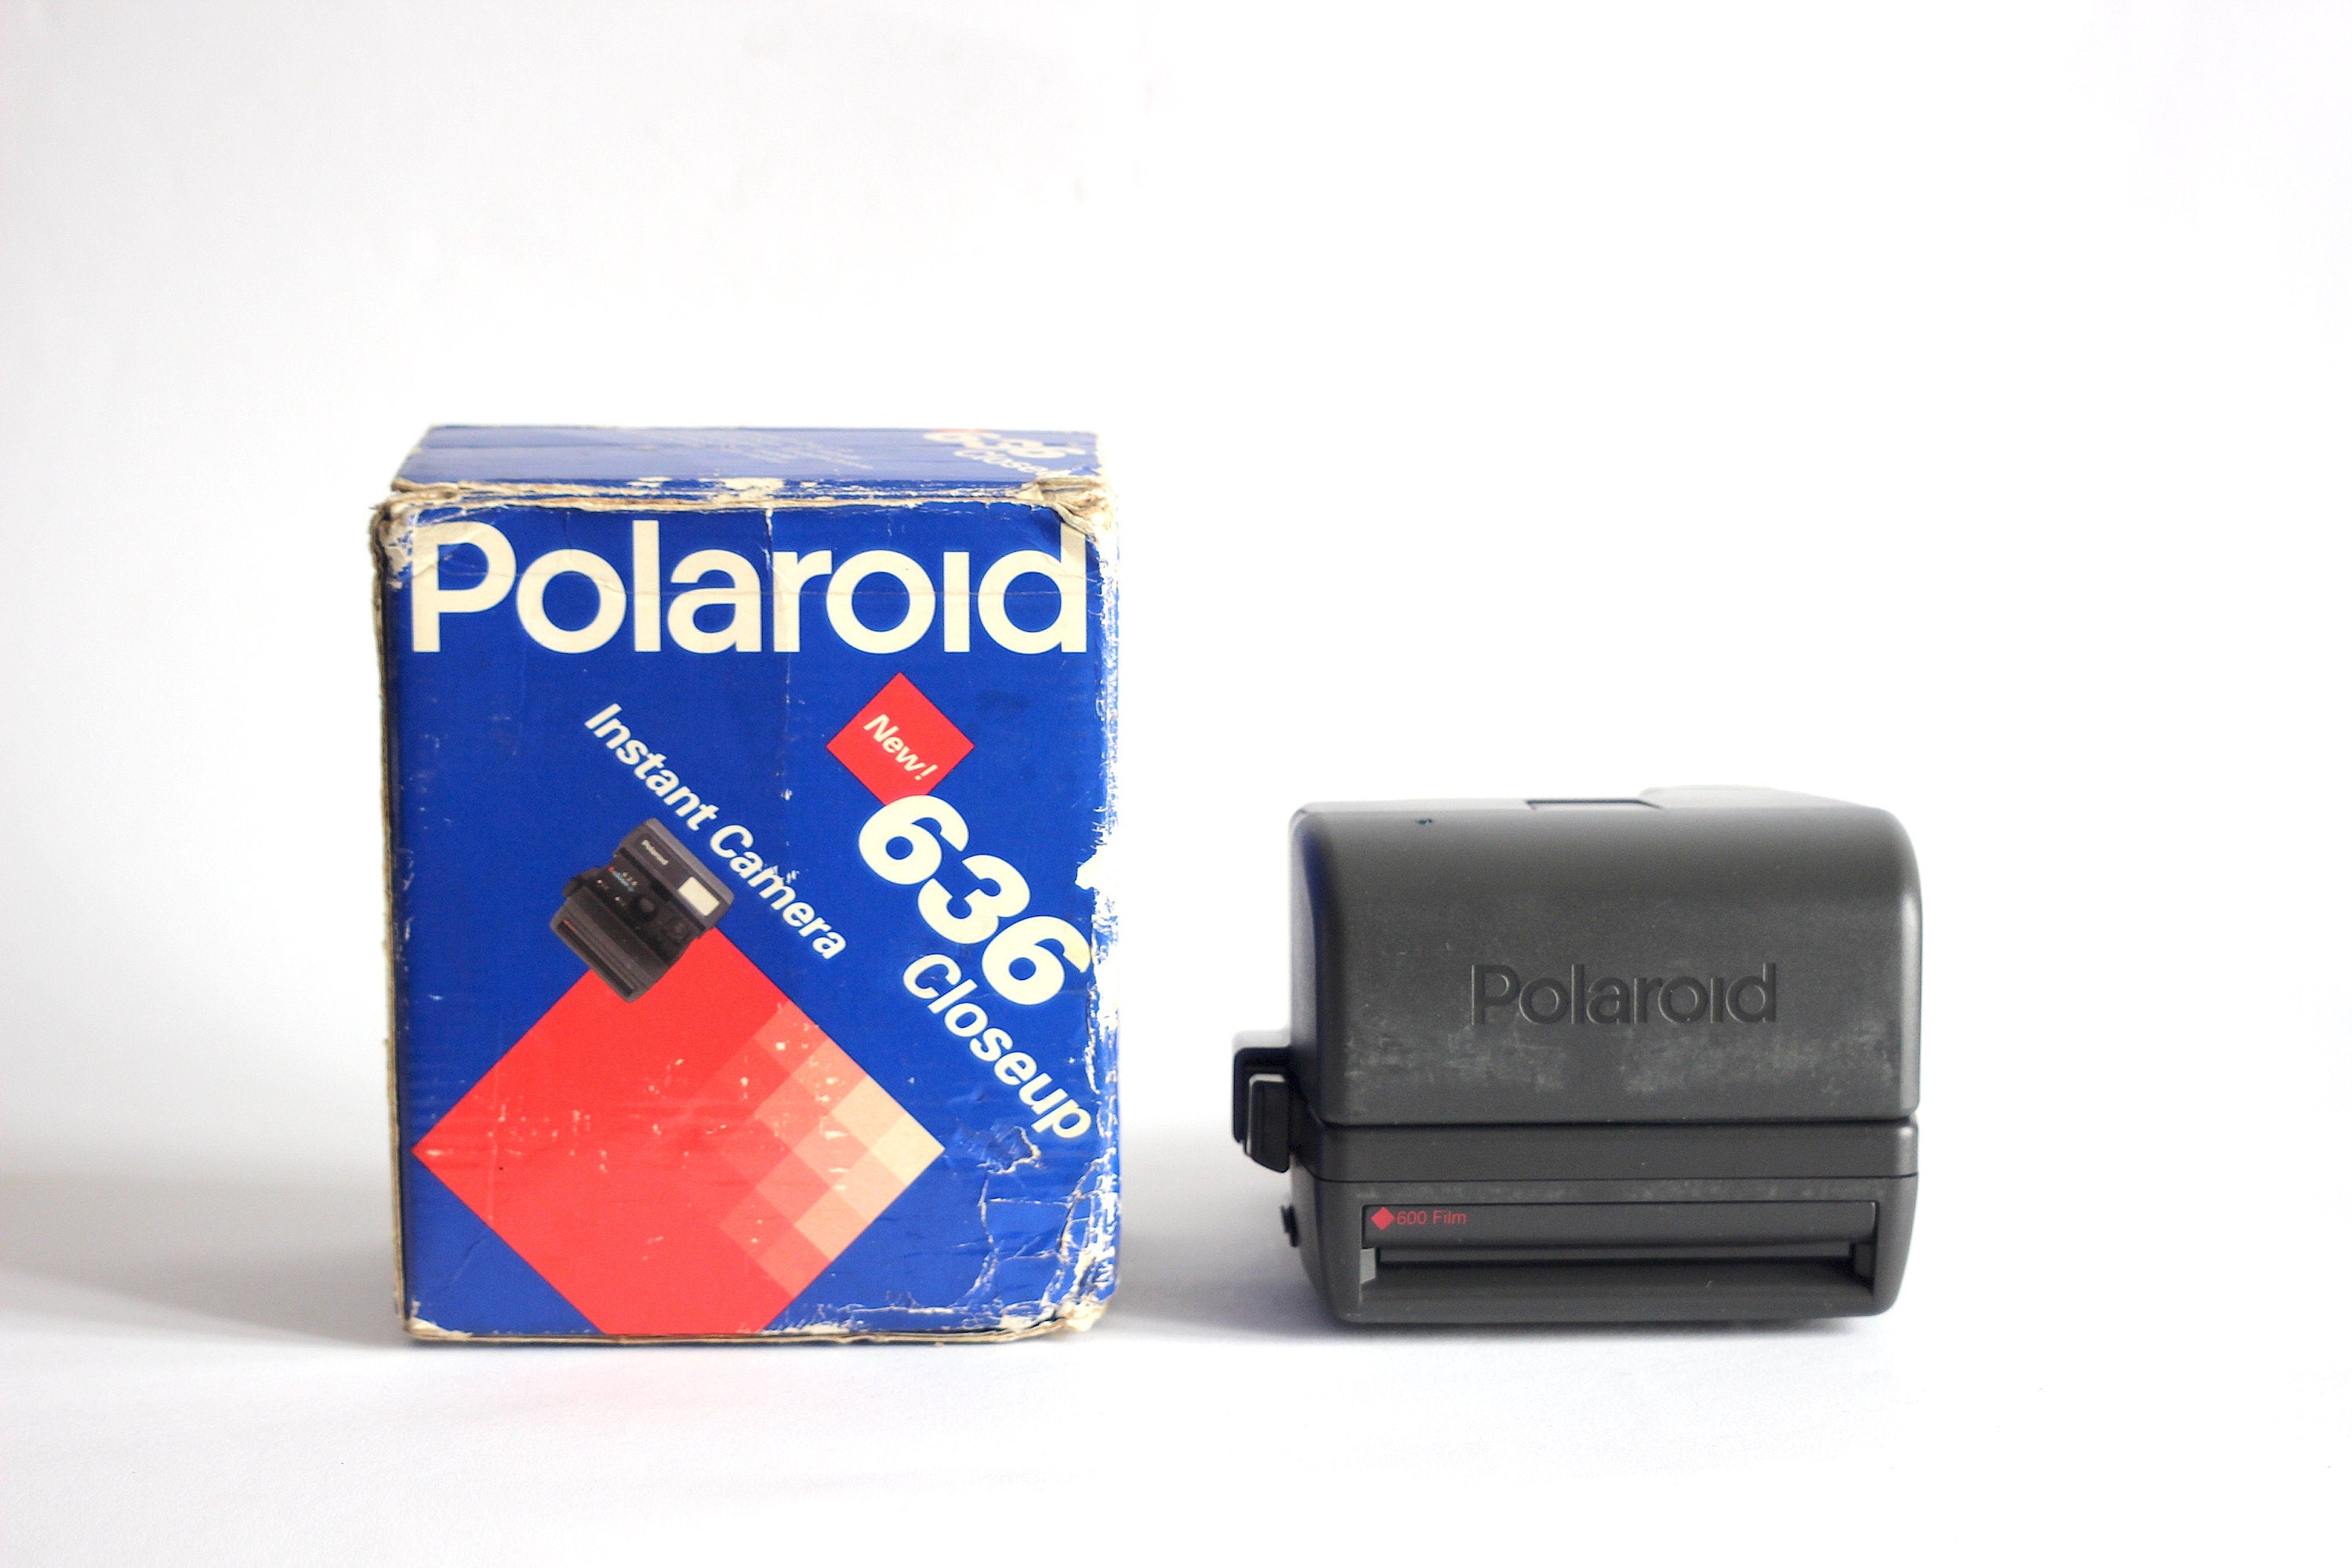 Polaroid Supercolor 600 + film - Appareil photo